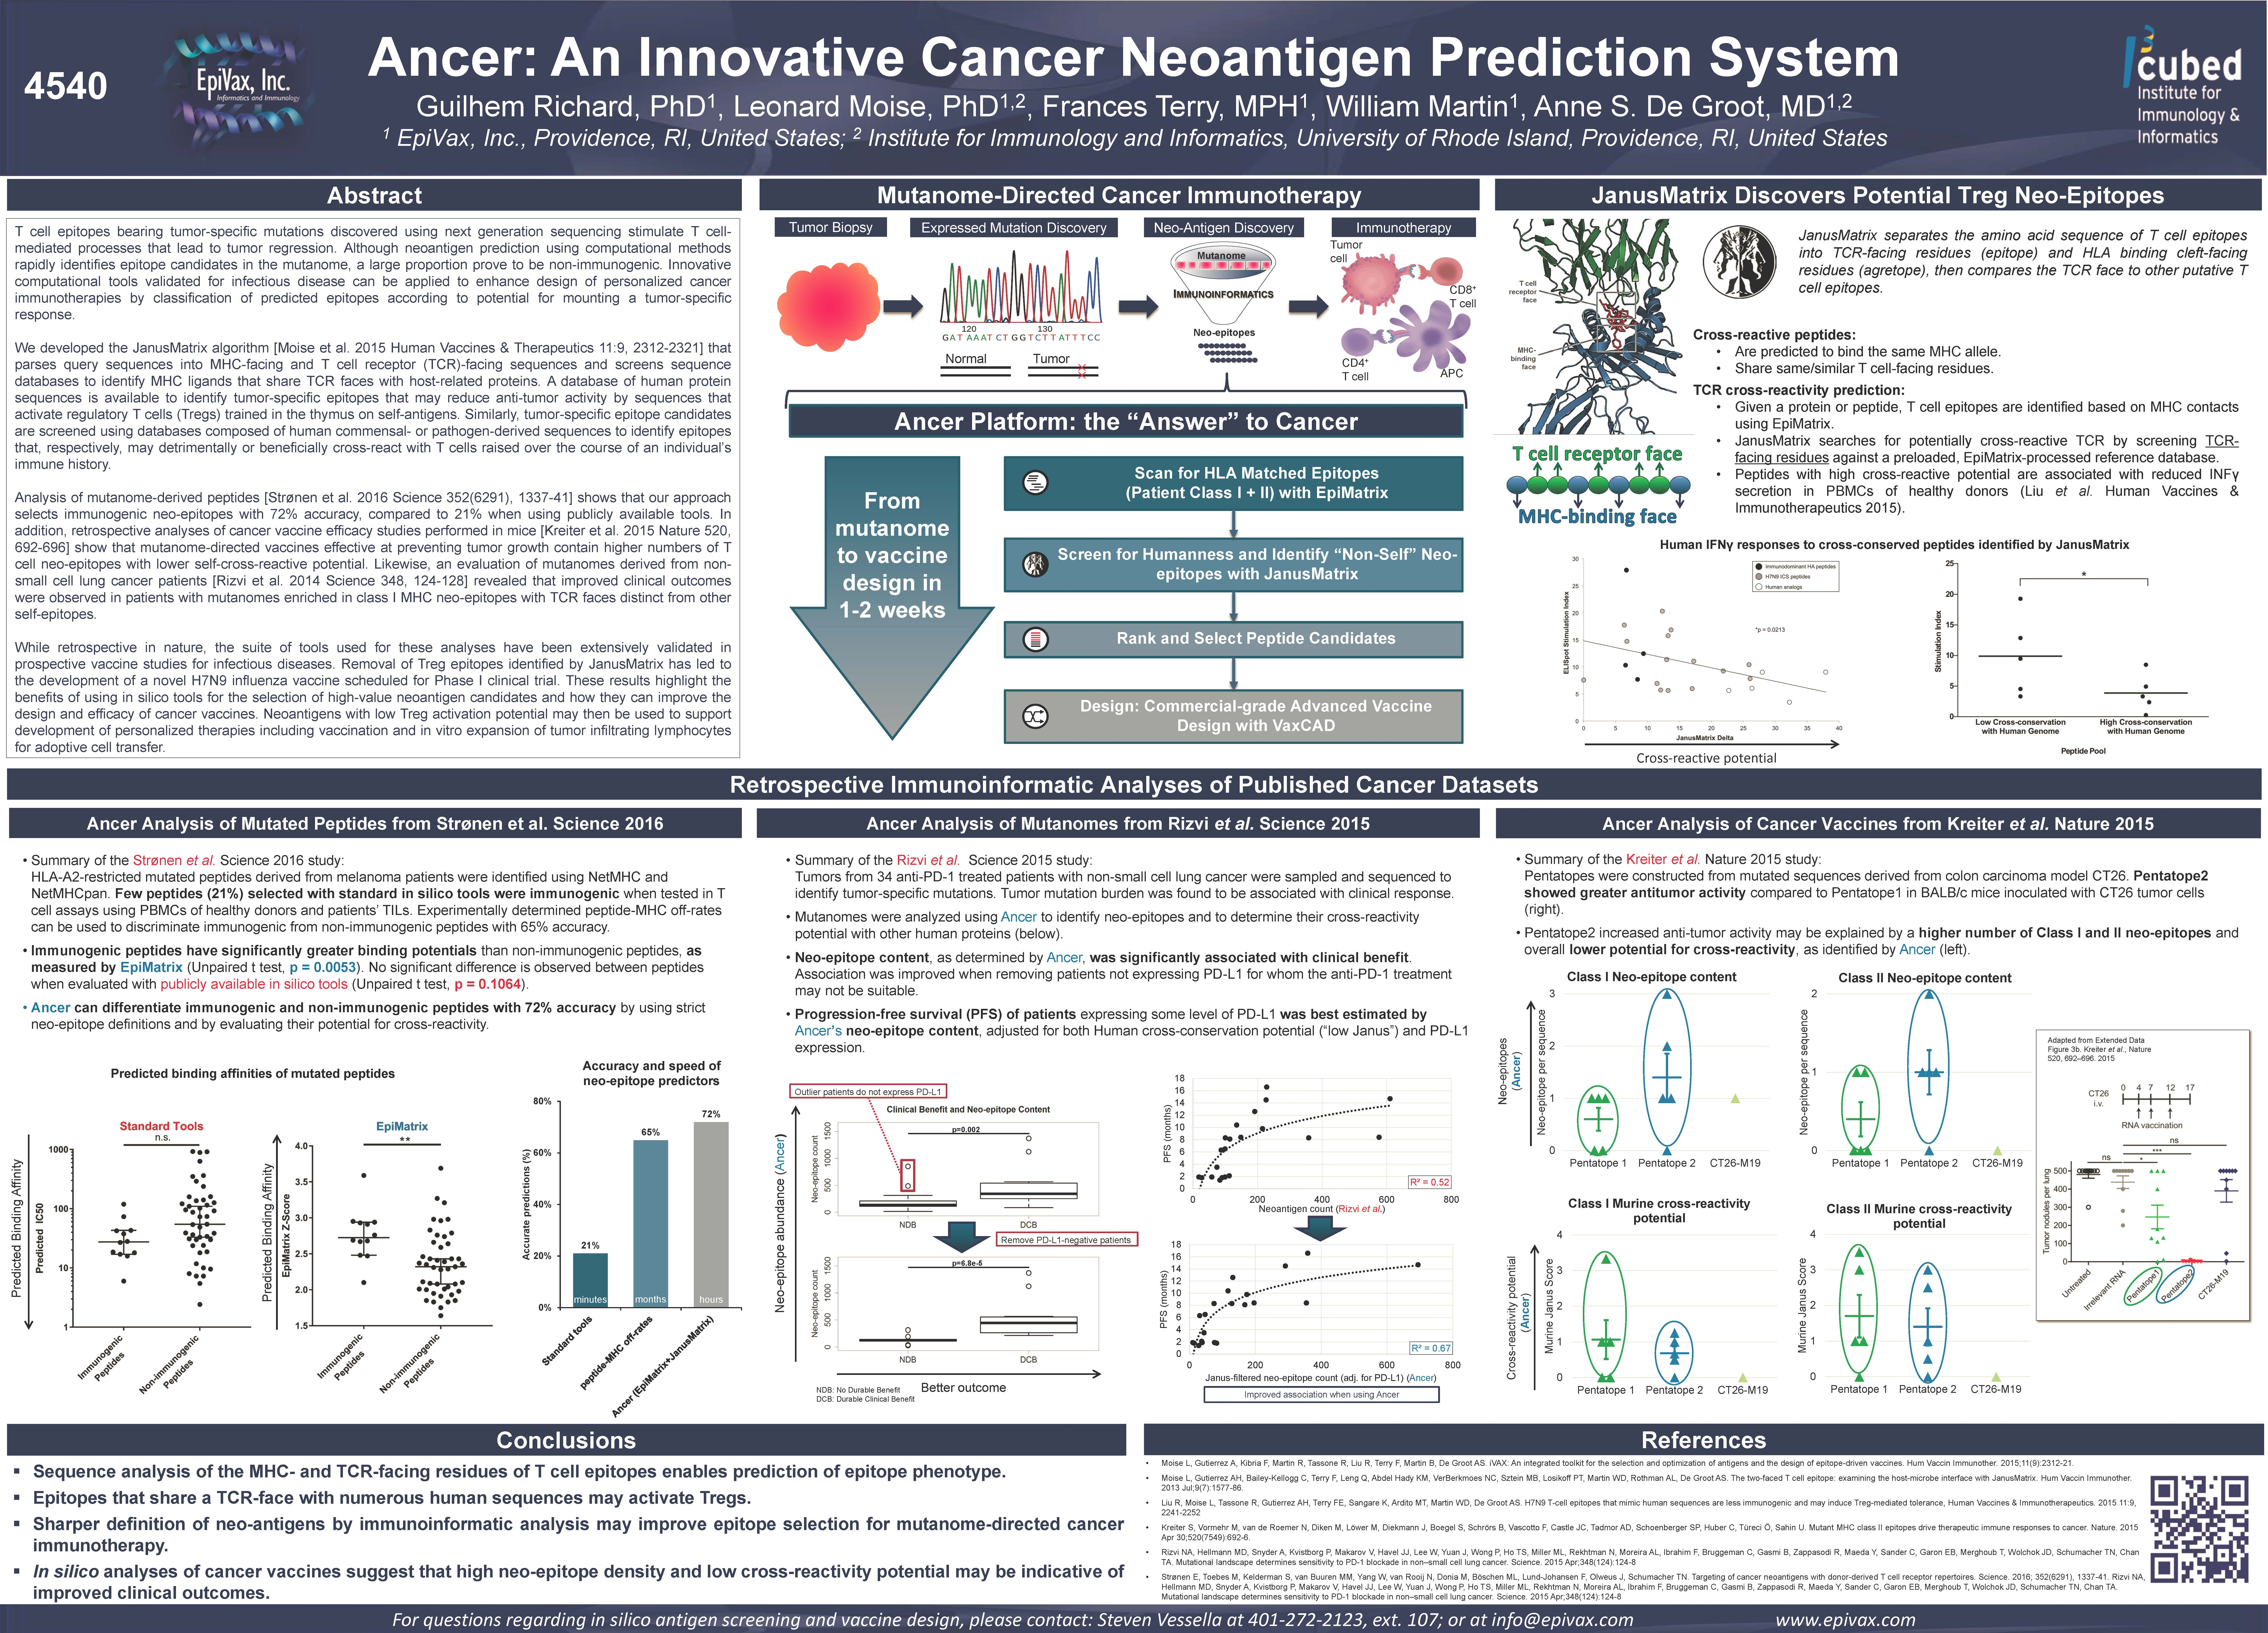 Ancer: An Innovative Cancer Neoantigen Prediction System